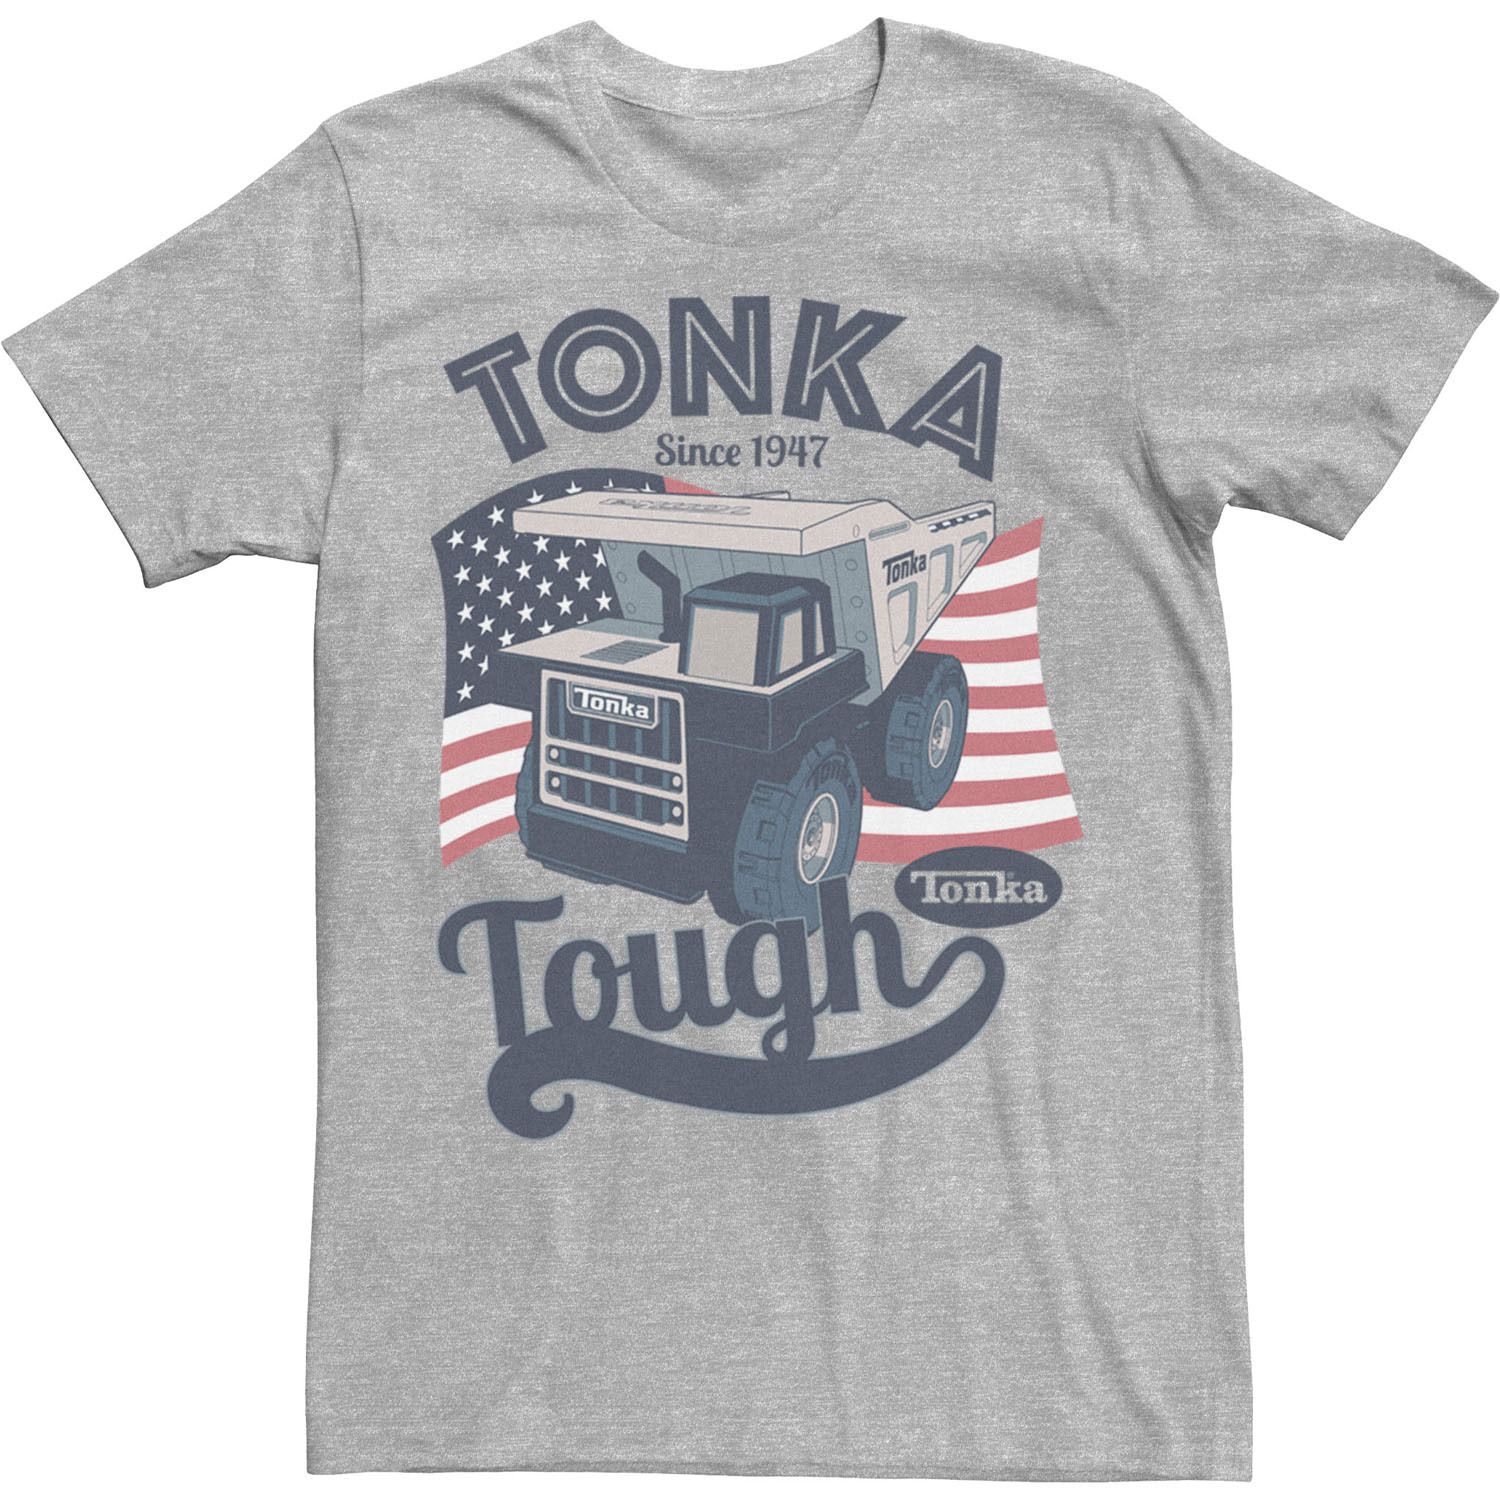 Мужская футболка Tonka Tough с логотипом американского флага Licensed Character